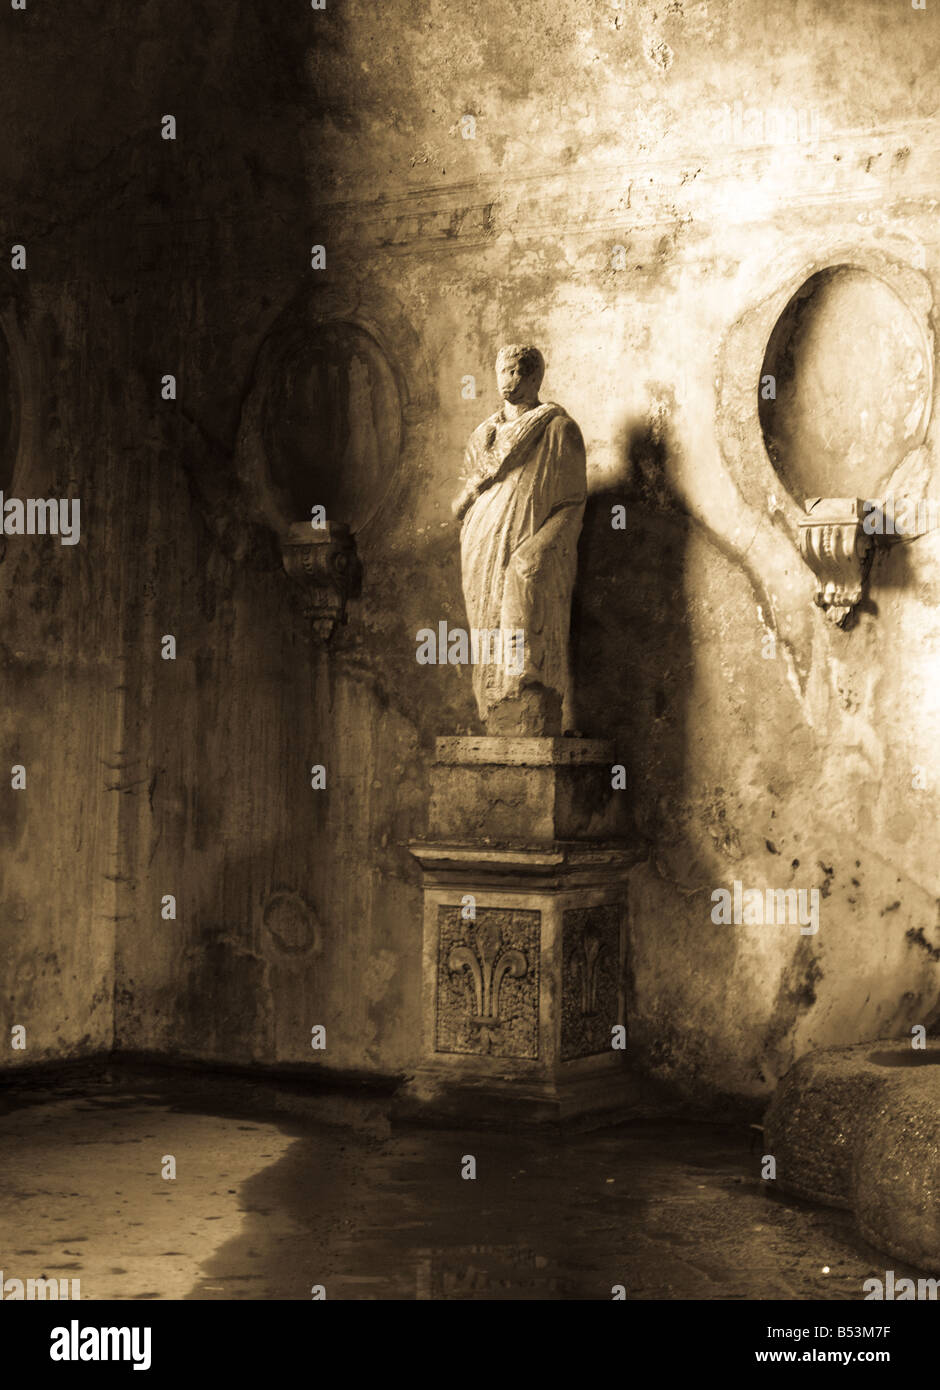 Antica statua romana in piedi in una caverna scura Foto Stock